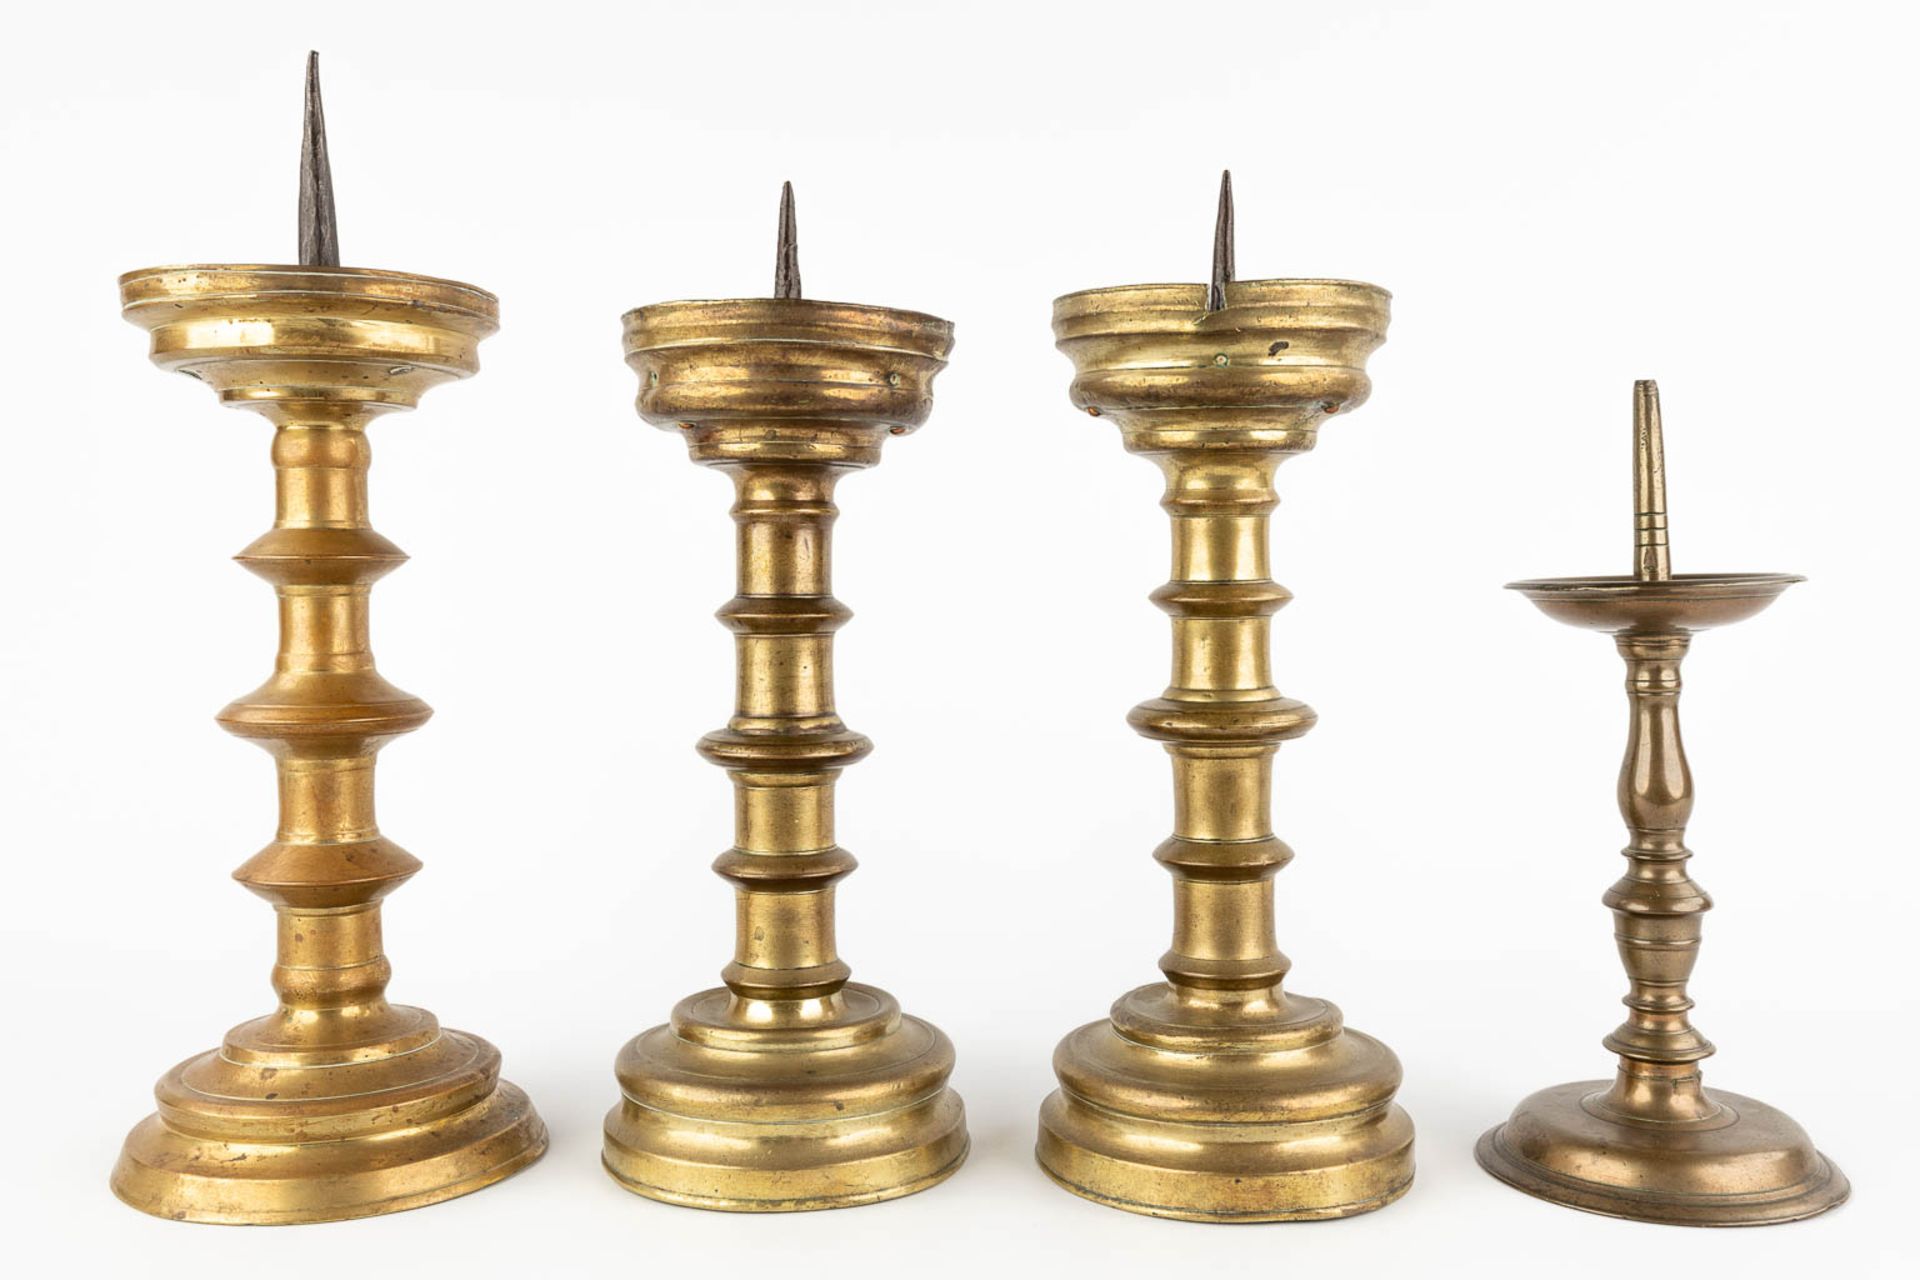 Four candlesticks, bronze, France and Germany, 17th-18th C. (H:36 x D:14 cm) - Bild 5 aus 11